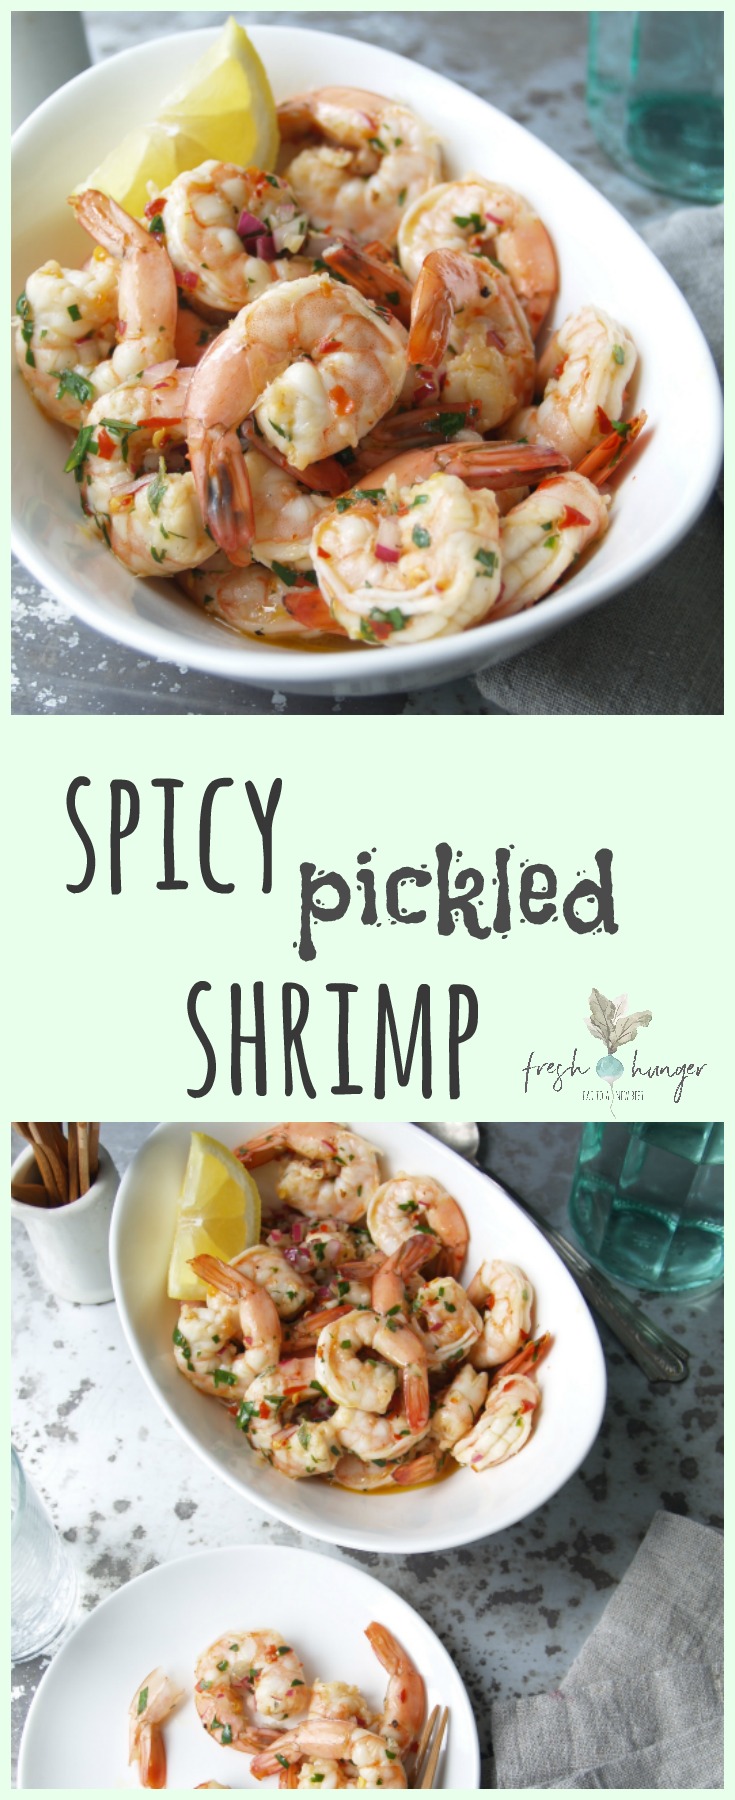 spicy pickled shrimp